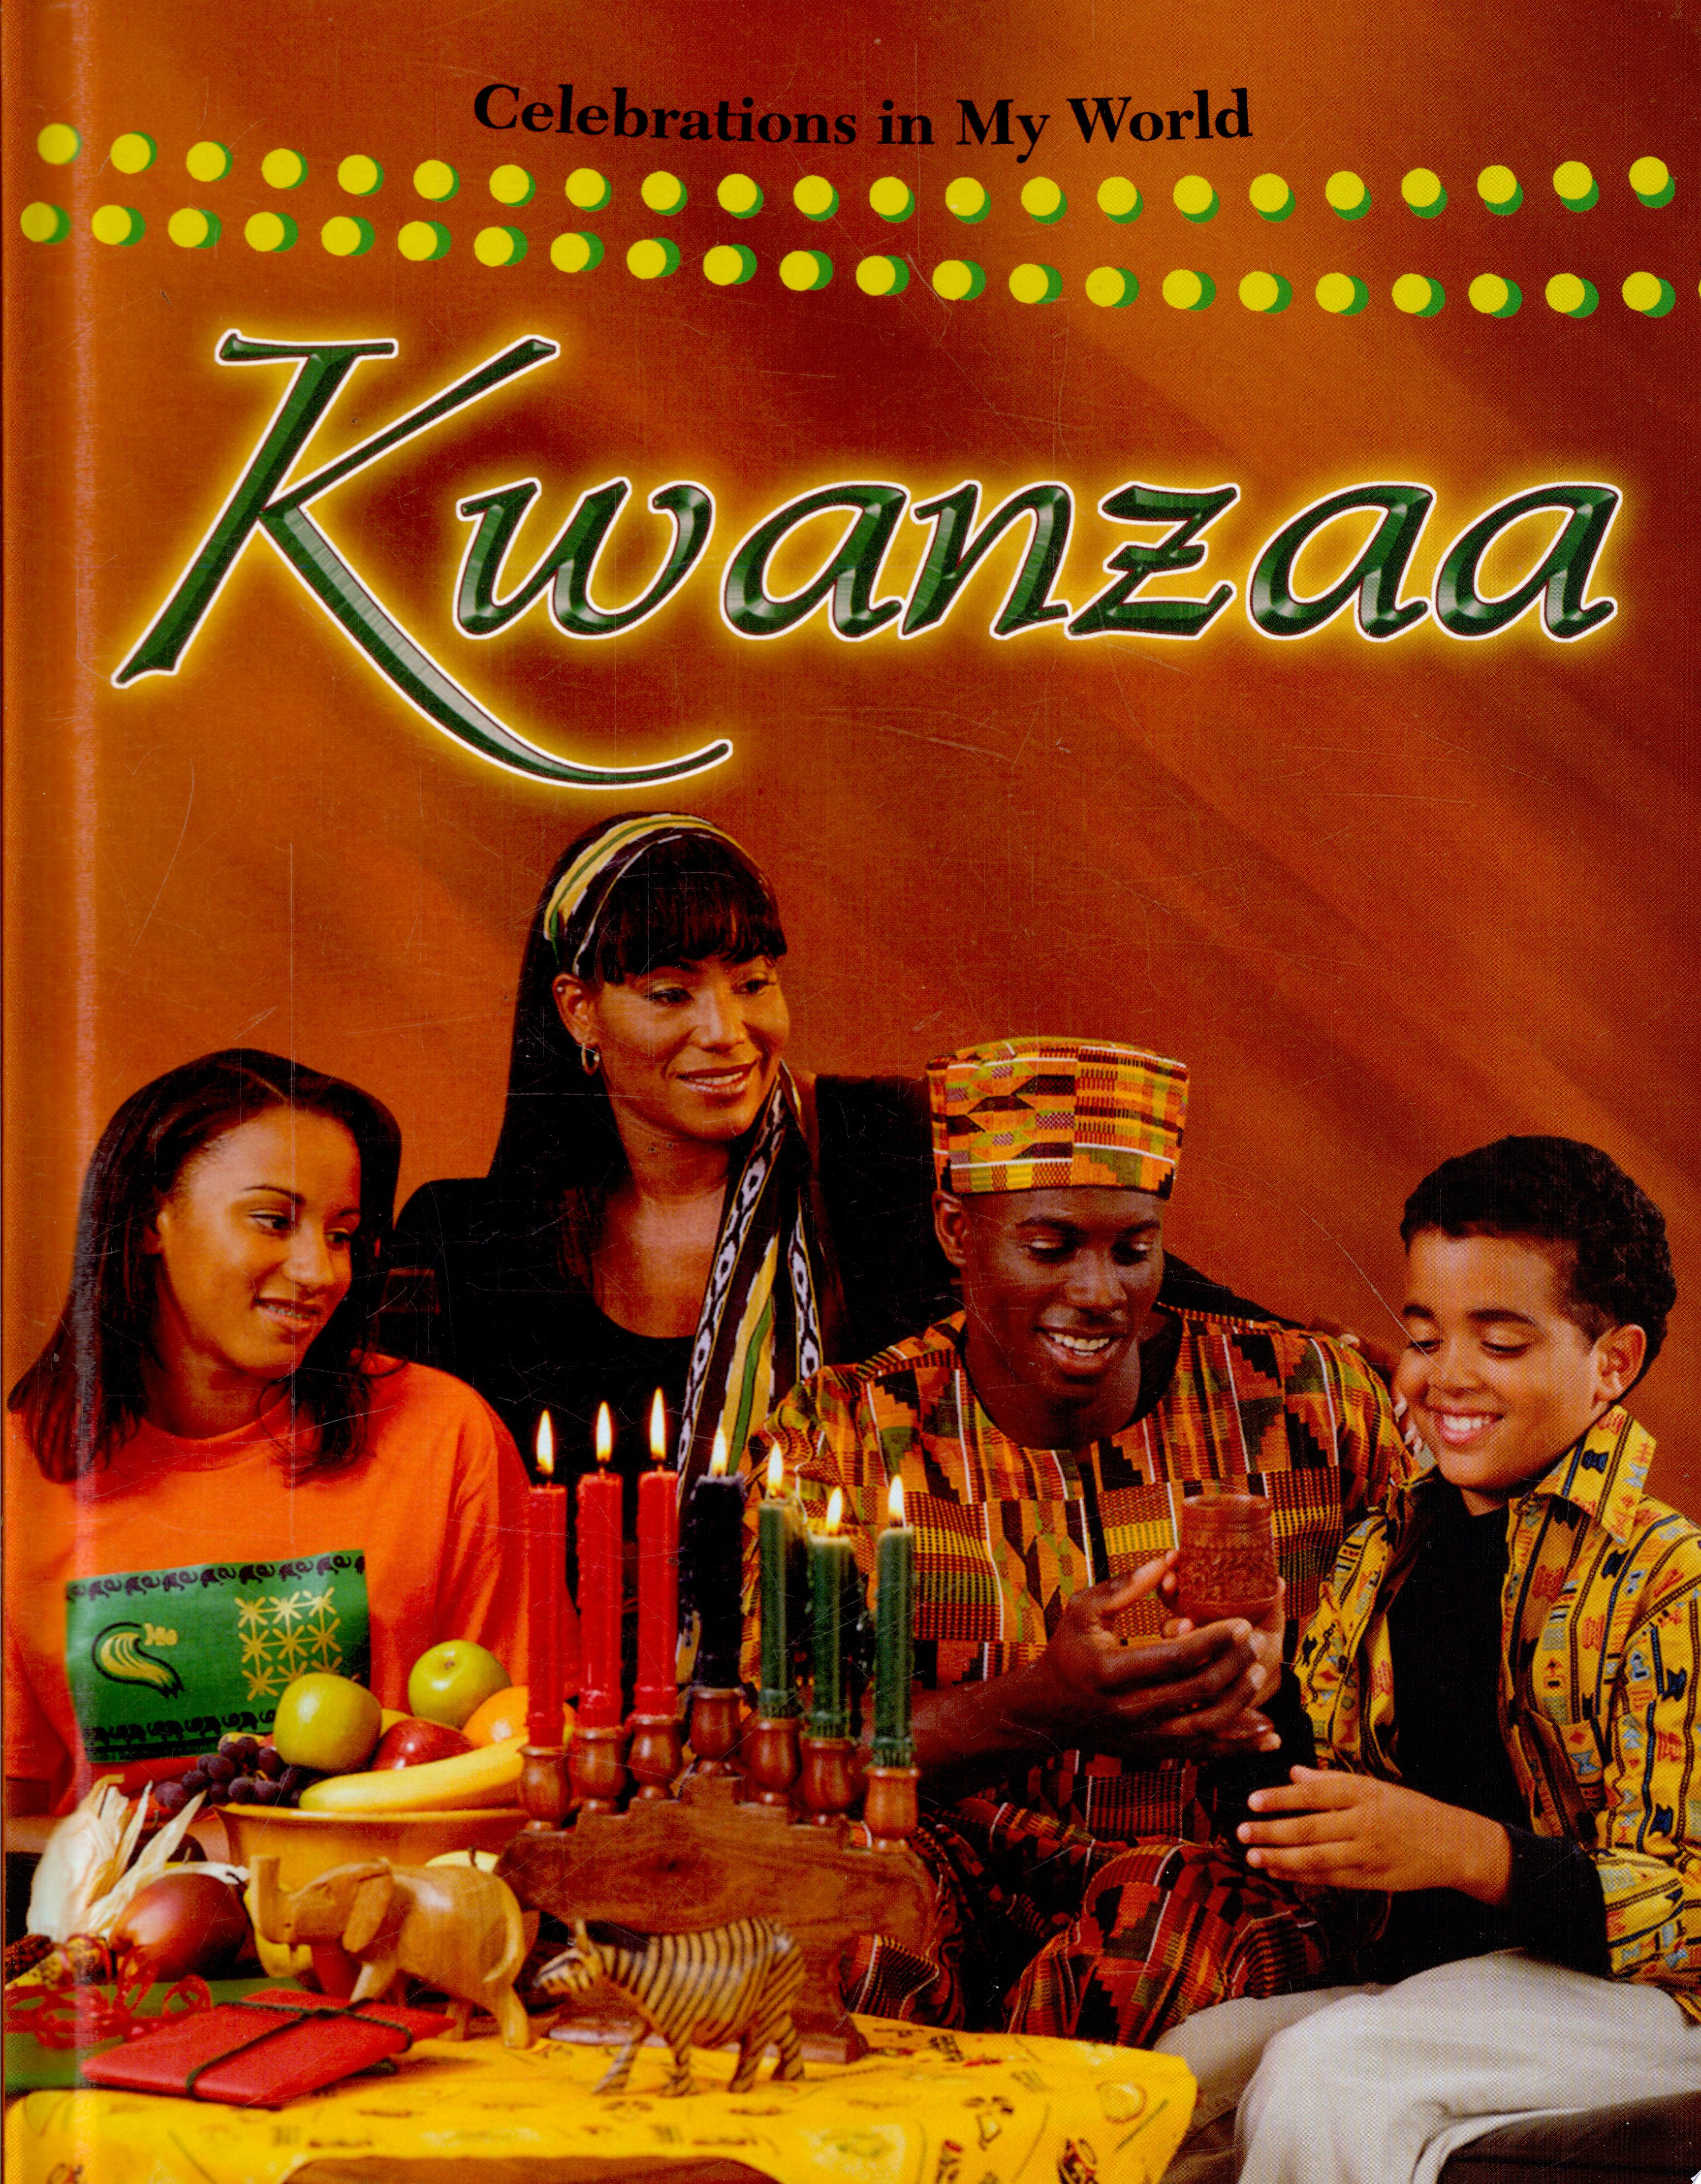 Image for "Kwanzaa"